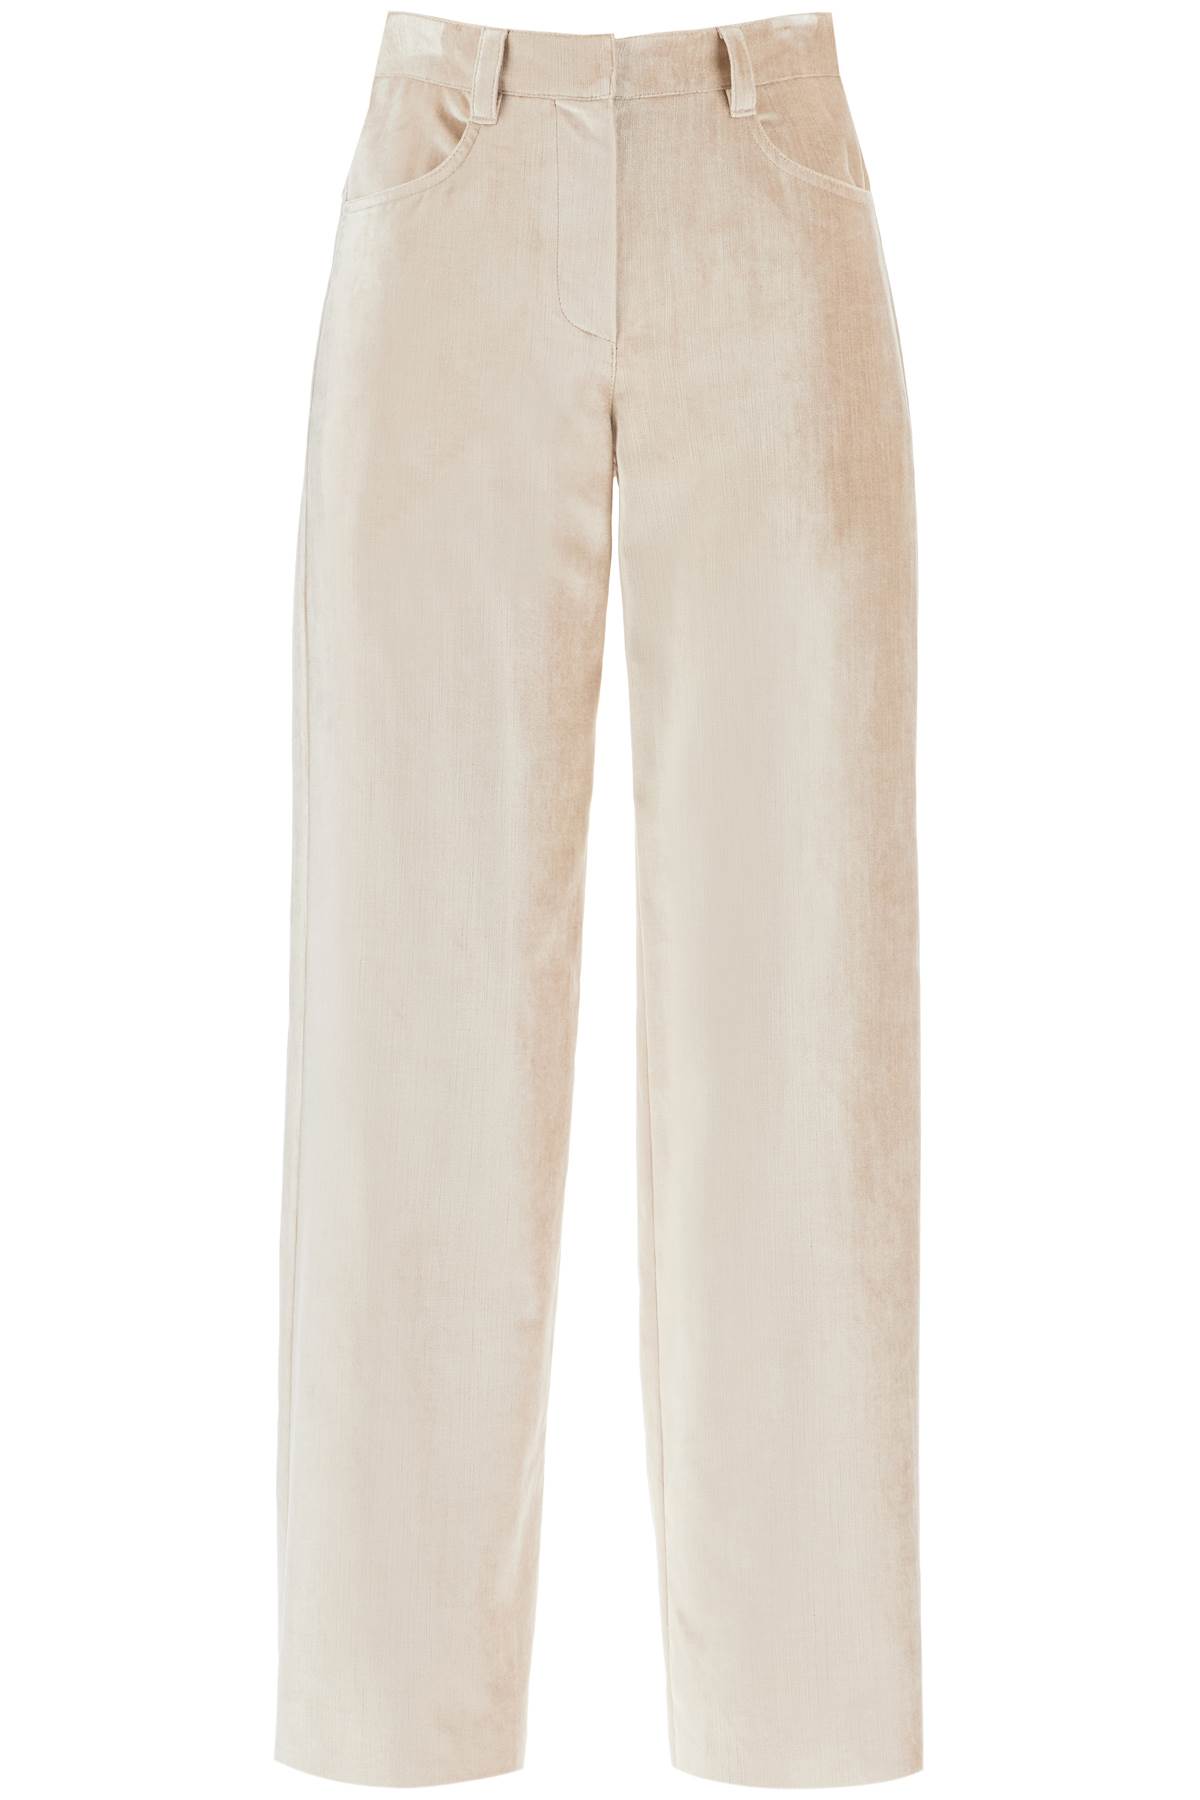 Velvet Pants For A Stylish Look.